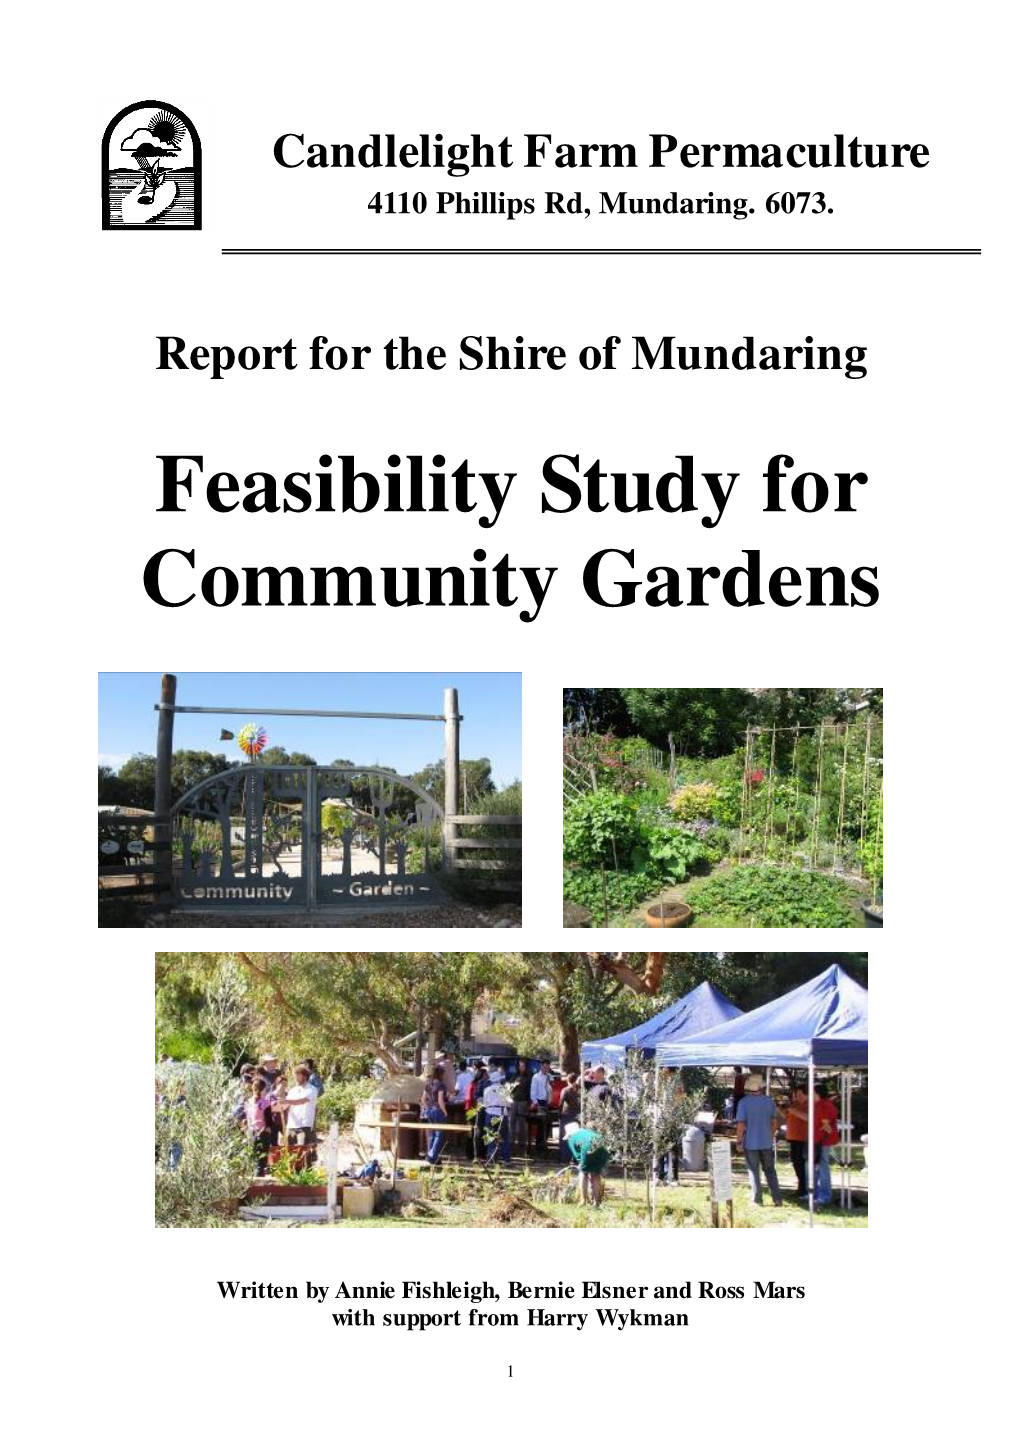 Feasibility Study for Community Gardens